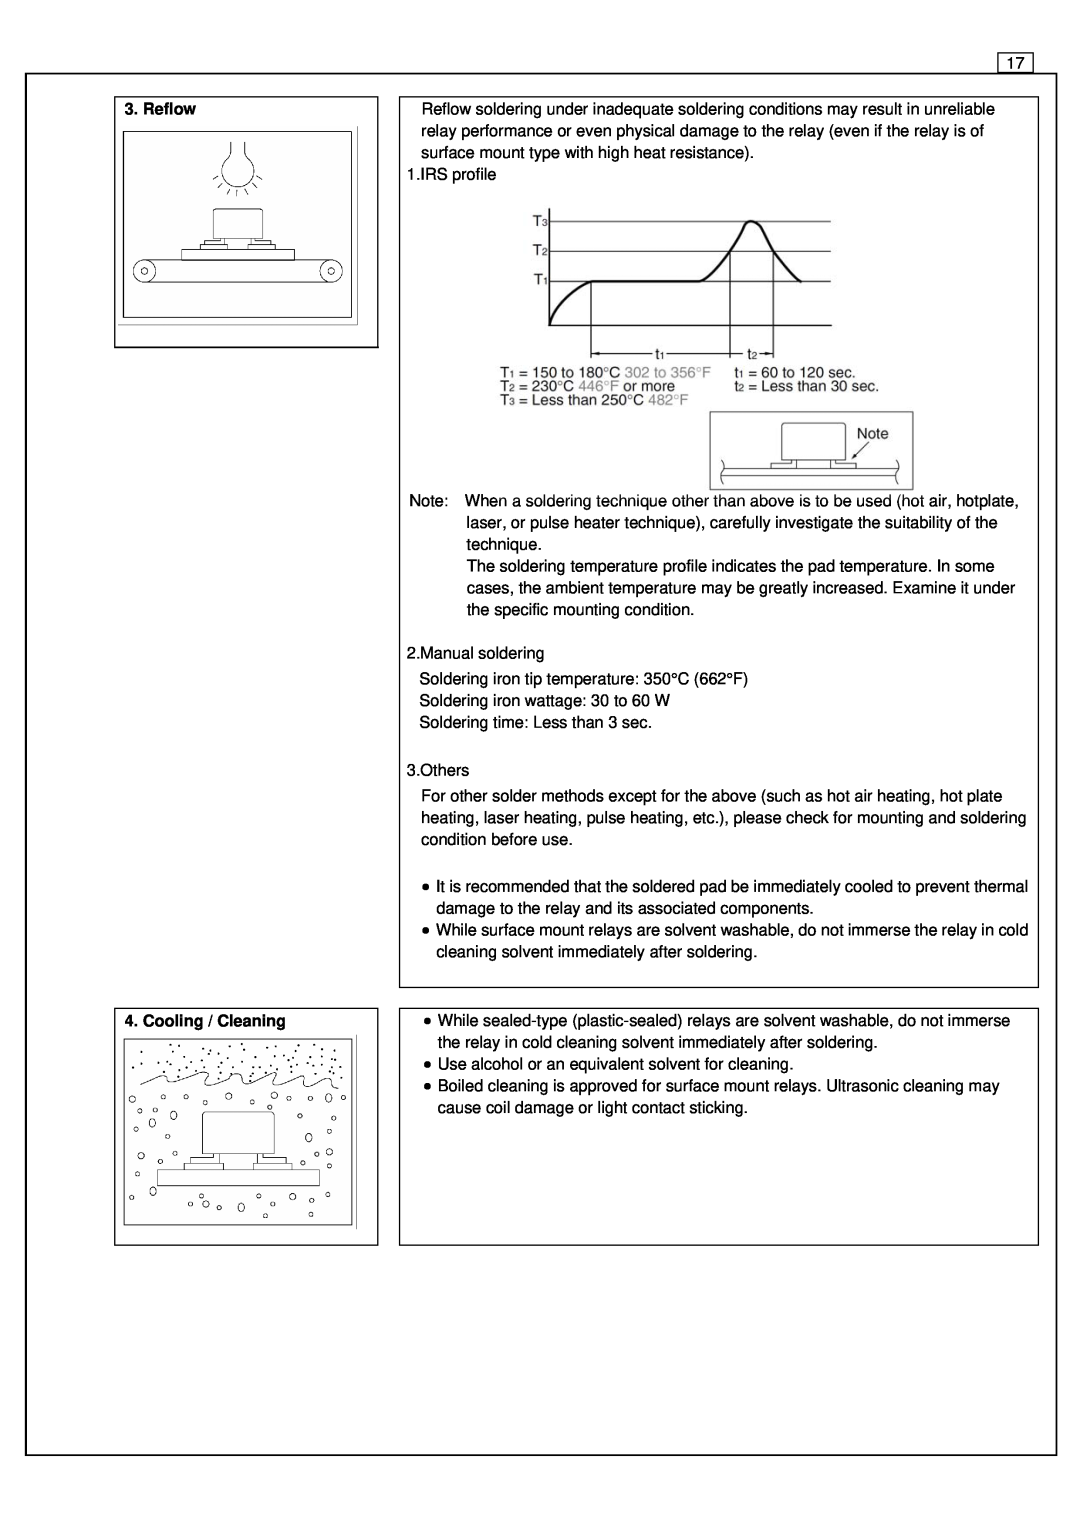 Panasonic ASCT1F46E manual Reflow 4. Cooling / Cleaning 